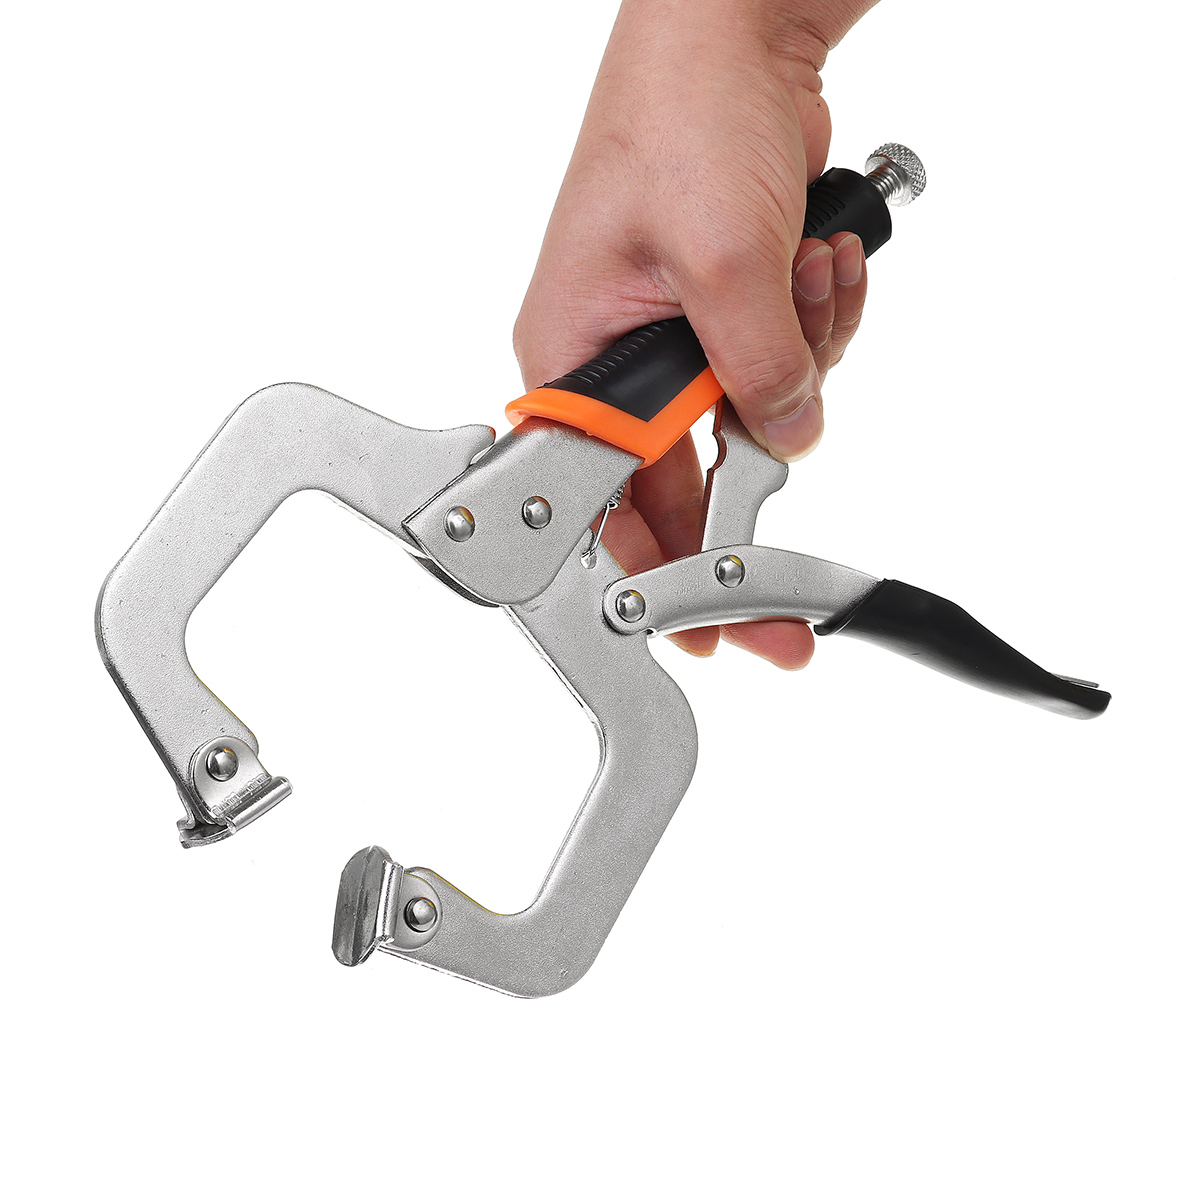 Plastic-Pocket-Hole-Jig-Set-Woodworking-Tools-Welding-C-Clamp-Locking-Plier-Tenon-Locator-1662682-8